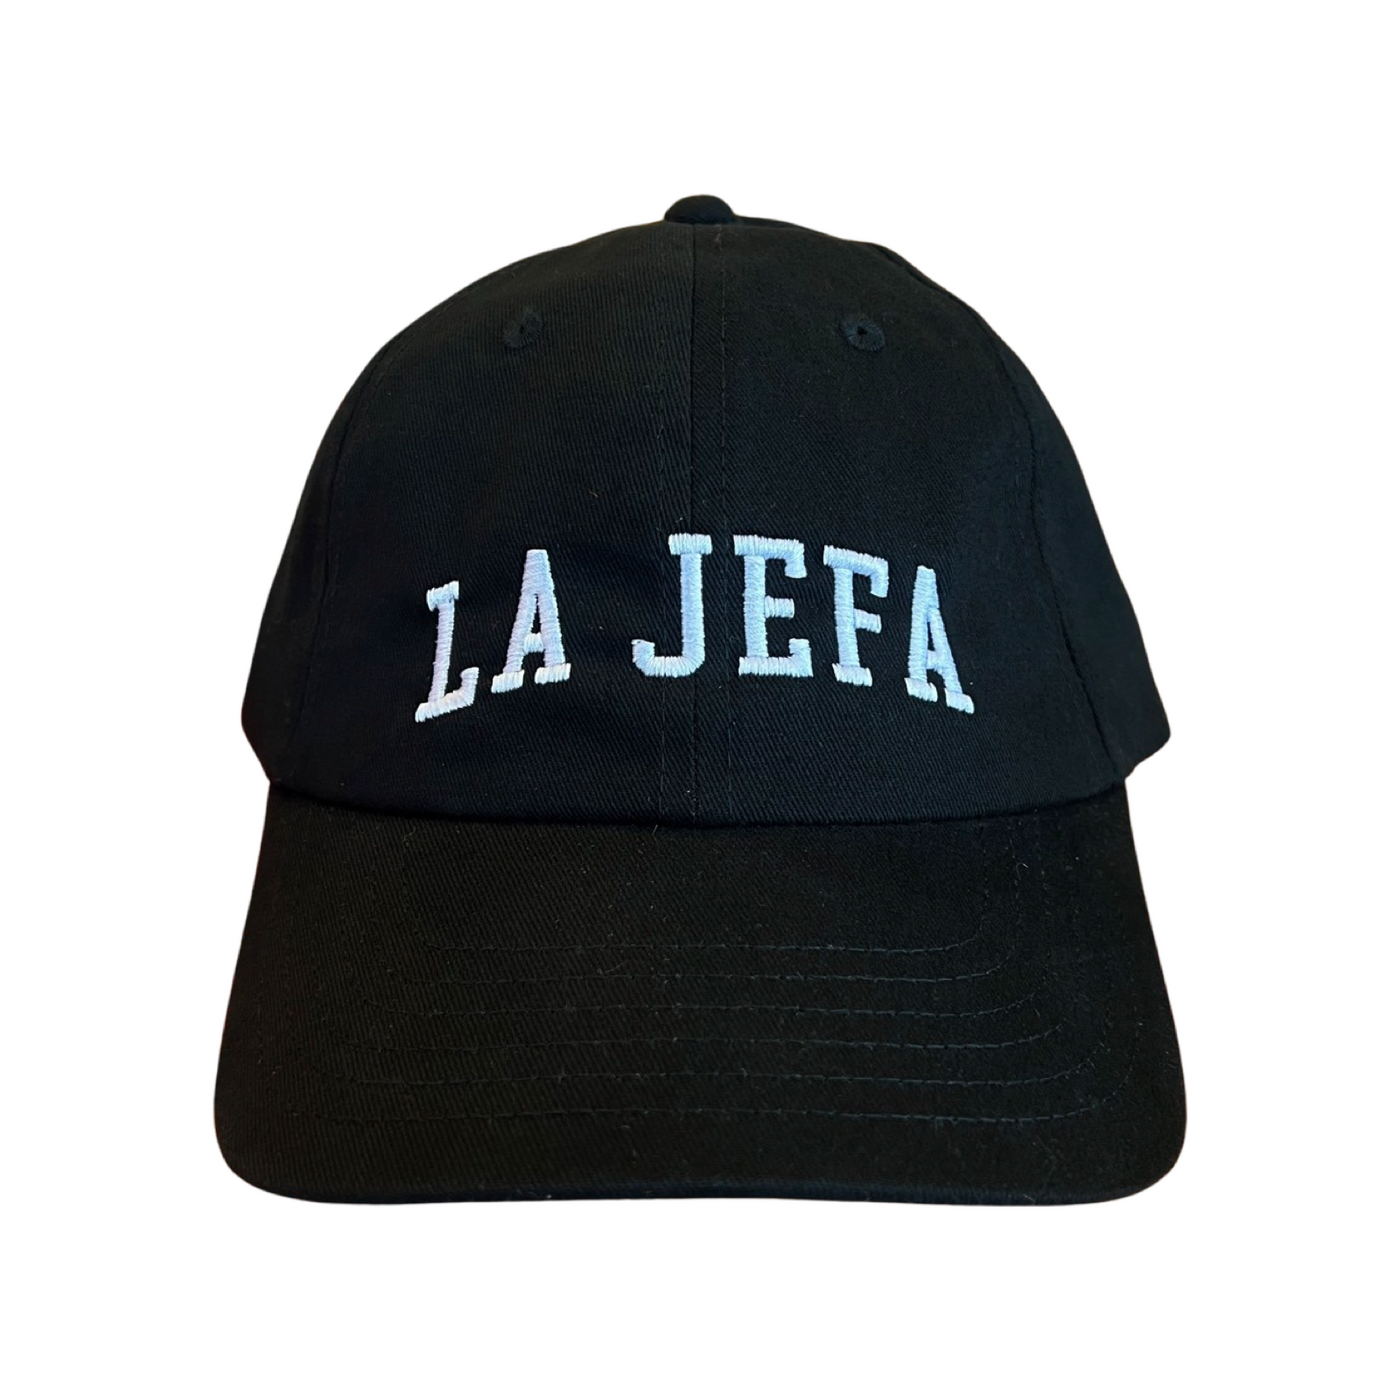 black hat with the phrase La Jefa in white lettering